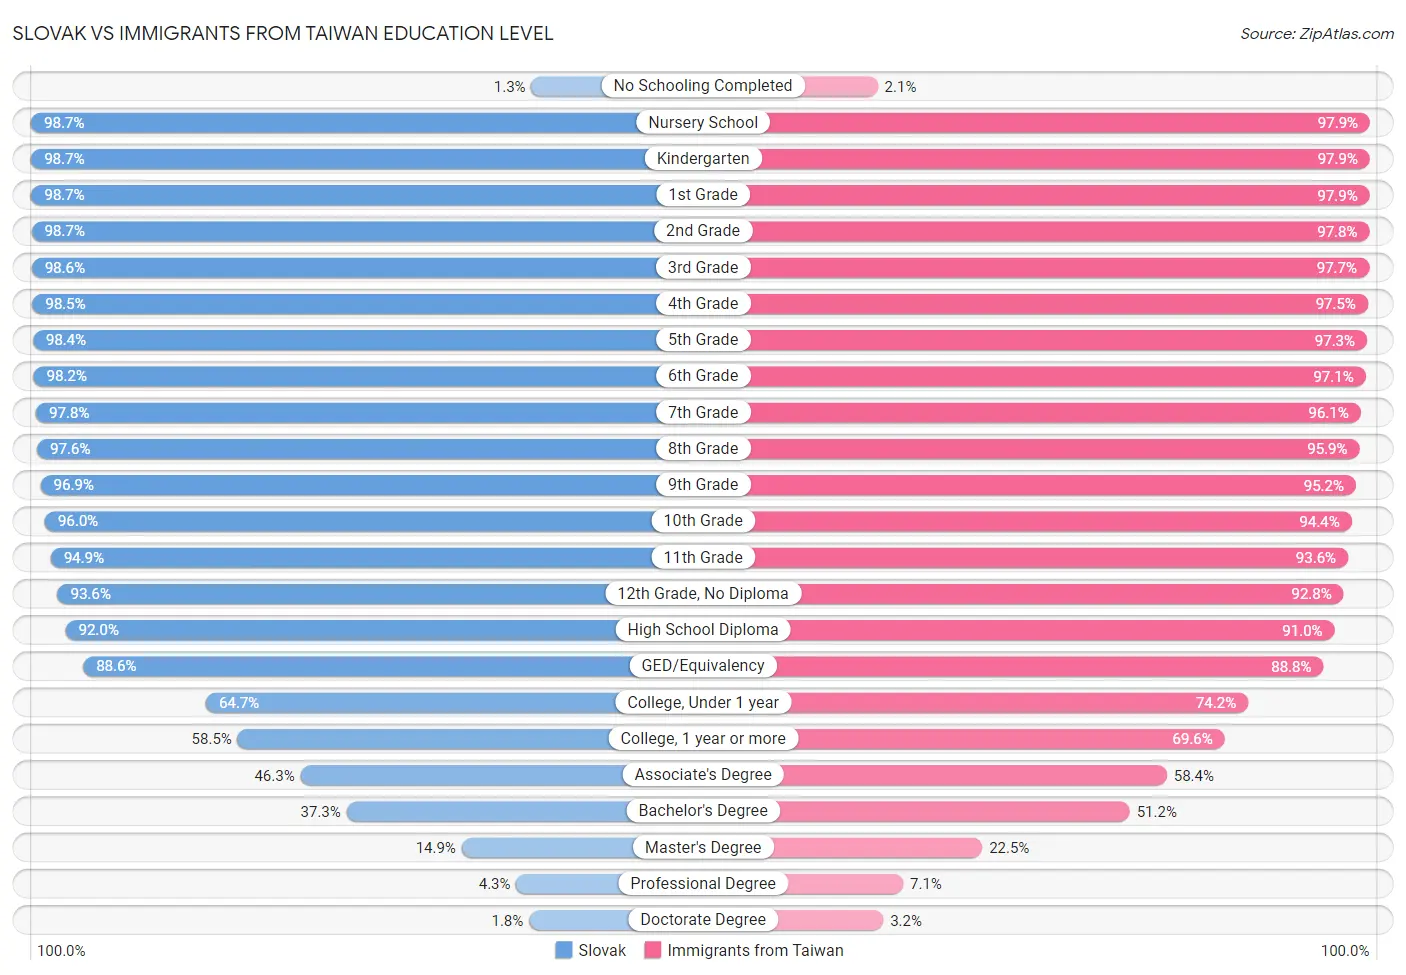 Slovak vs Immigrants from Taiwan Education Level